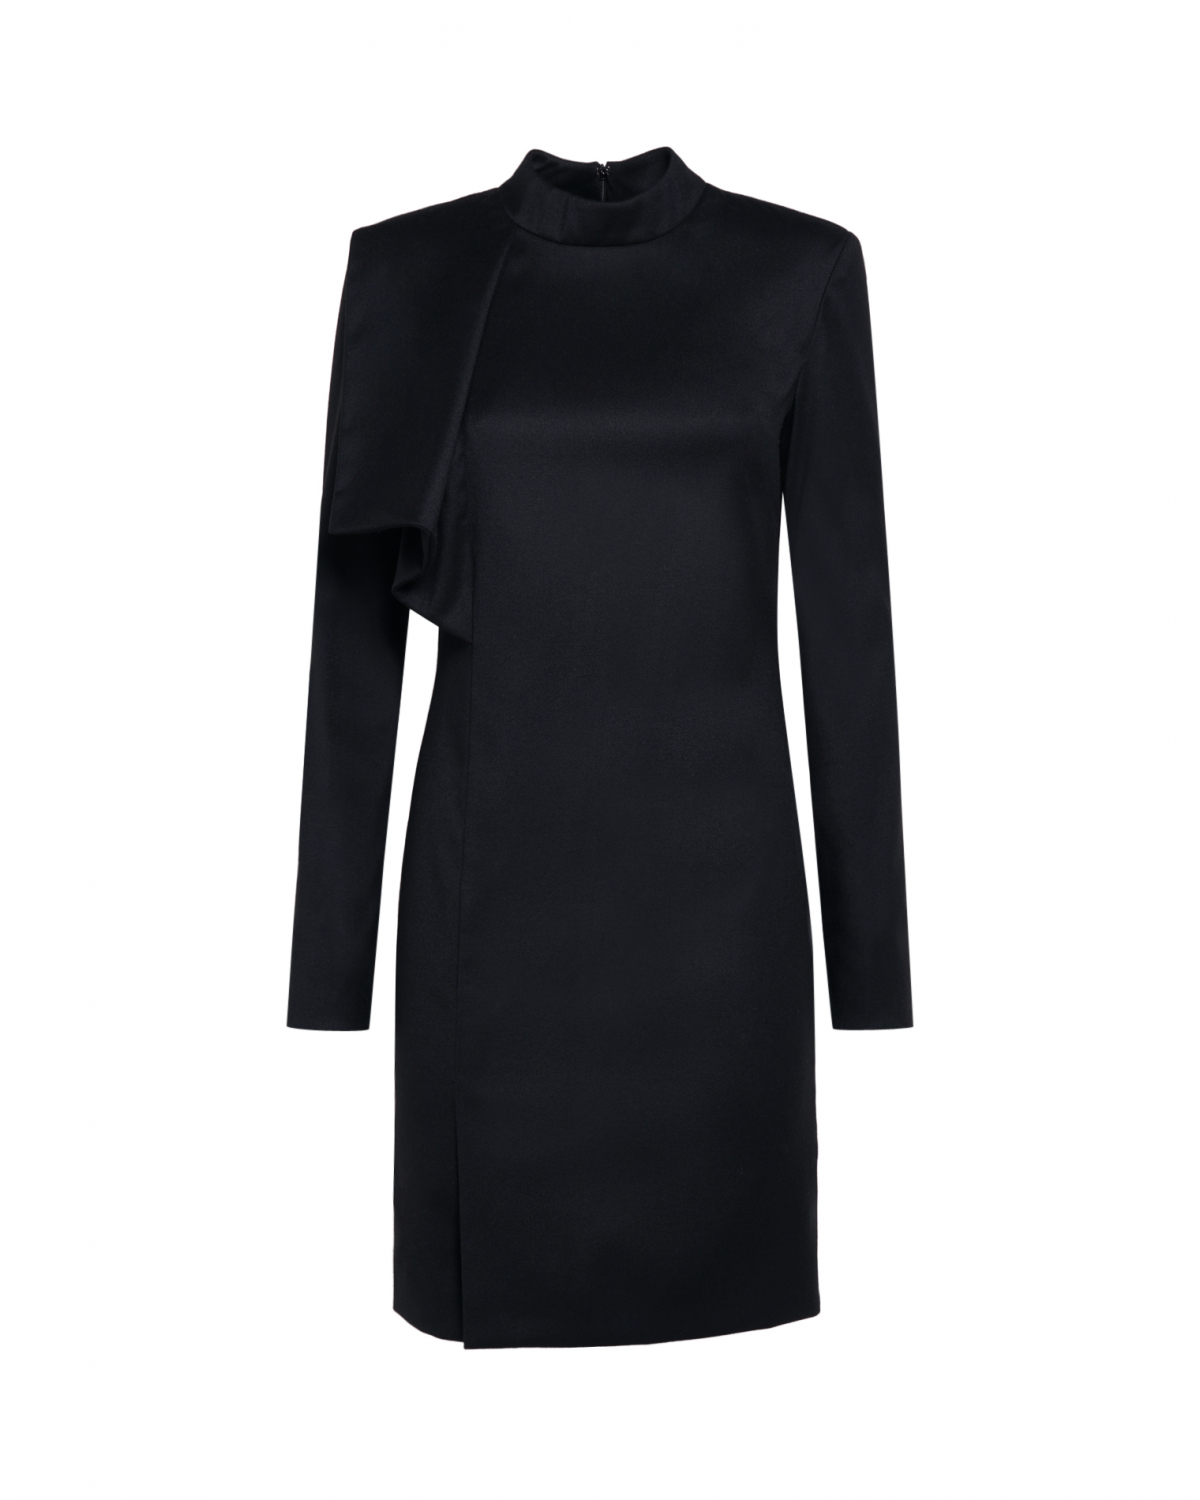 Black dress with side split | Sale, -50% | Genny